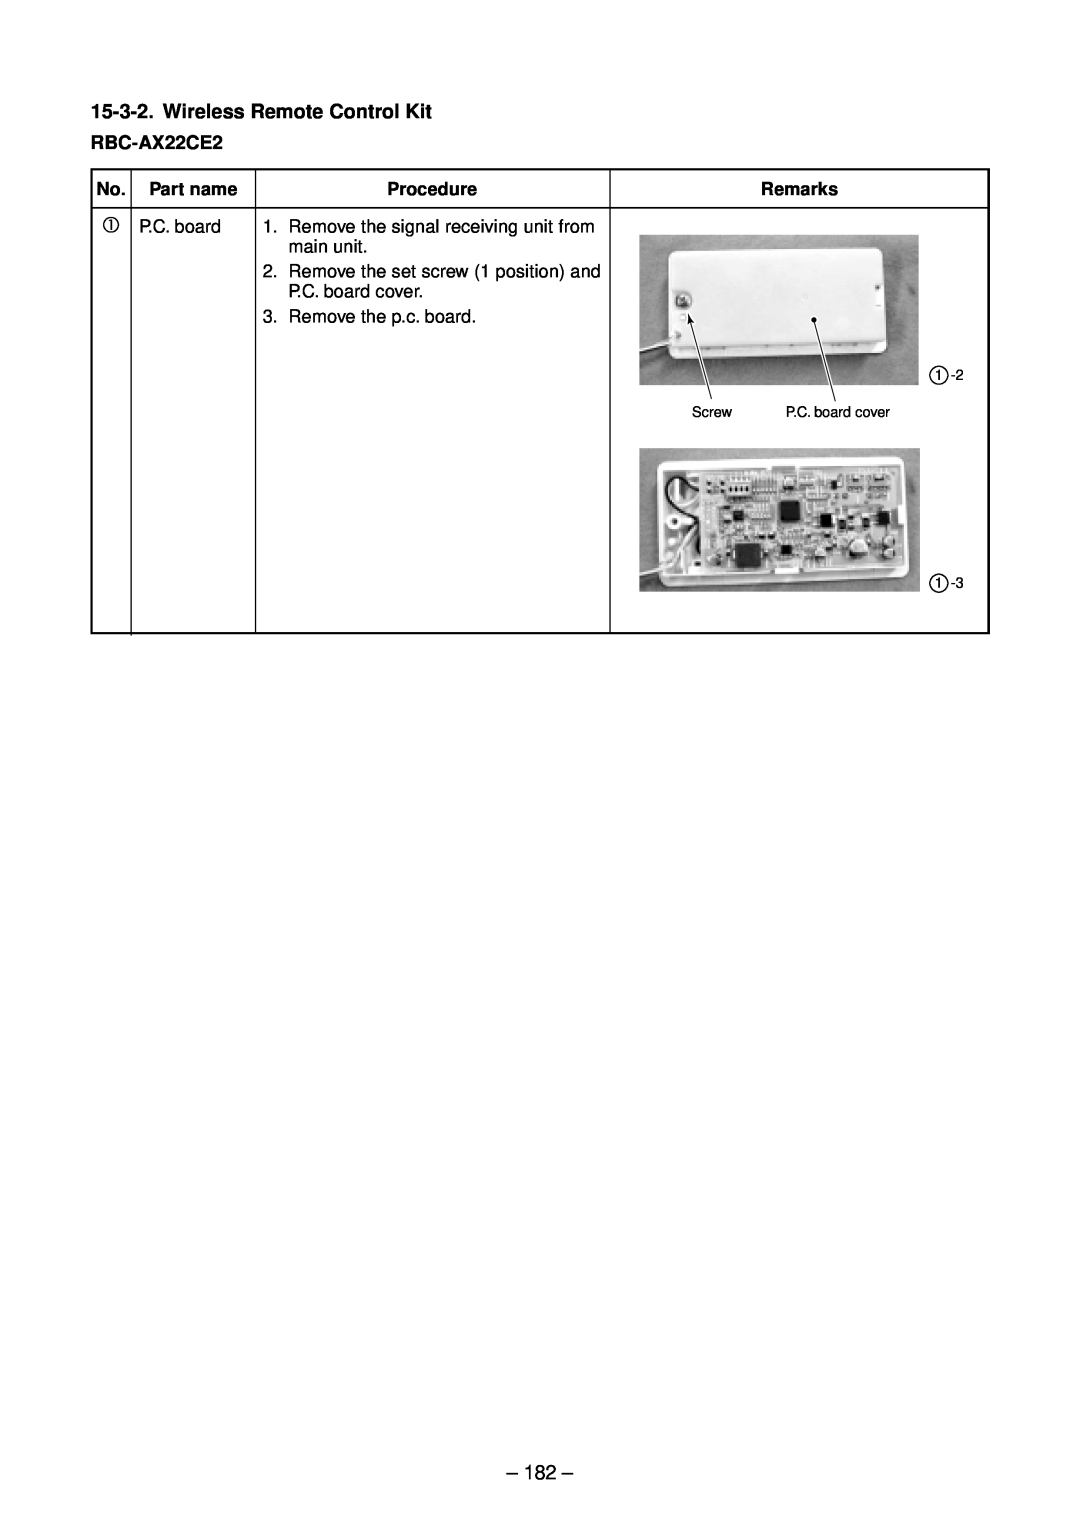 Toshiba RAV-SM1102CT-E, RAV-SM1102BT-E Wireless Remote Control Kit, RBC-AX22CE2, No. Part name, Procedure, Remarks 